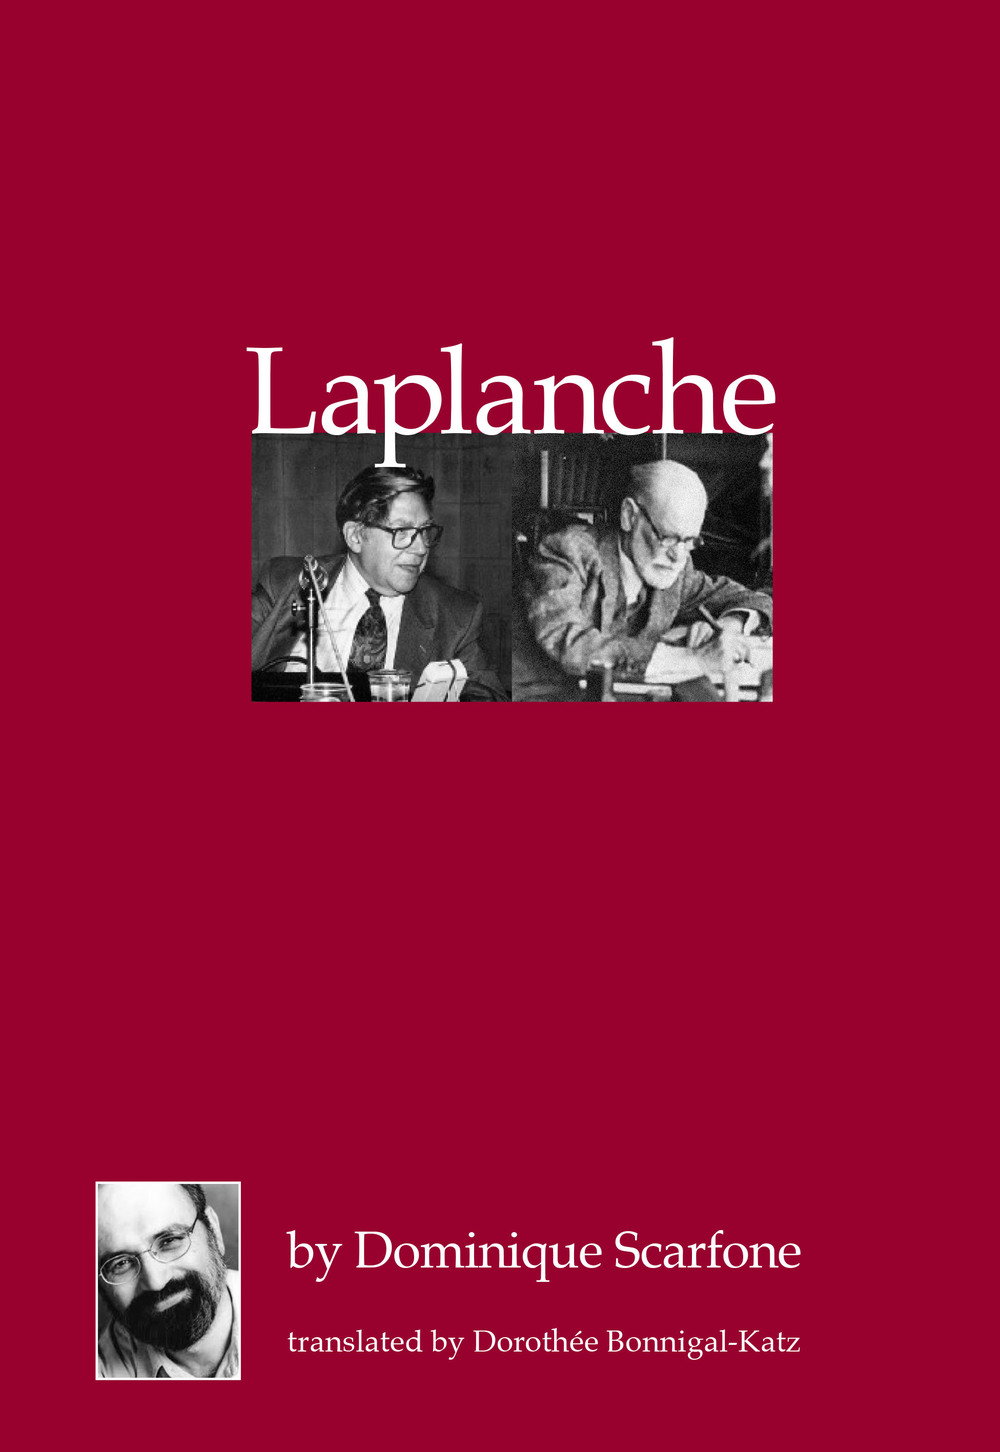 Laplanche: An Introduction